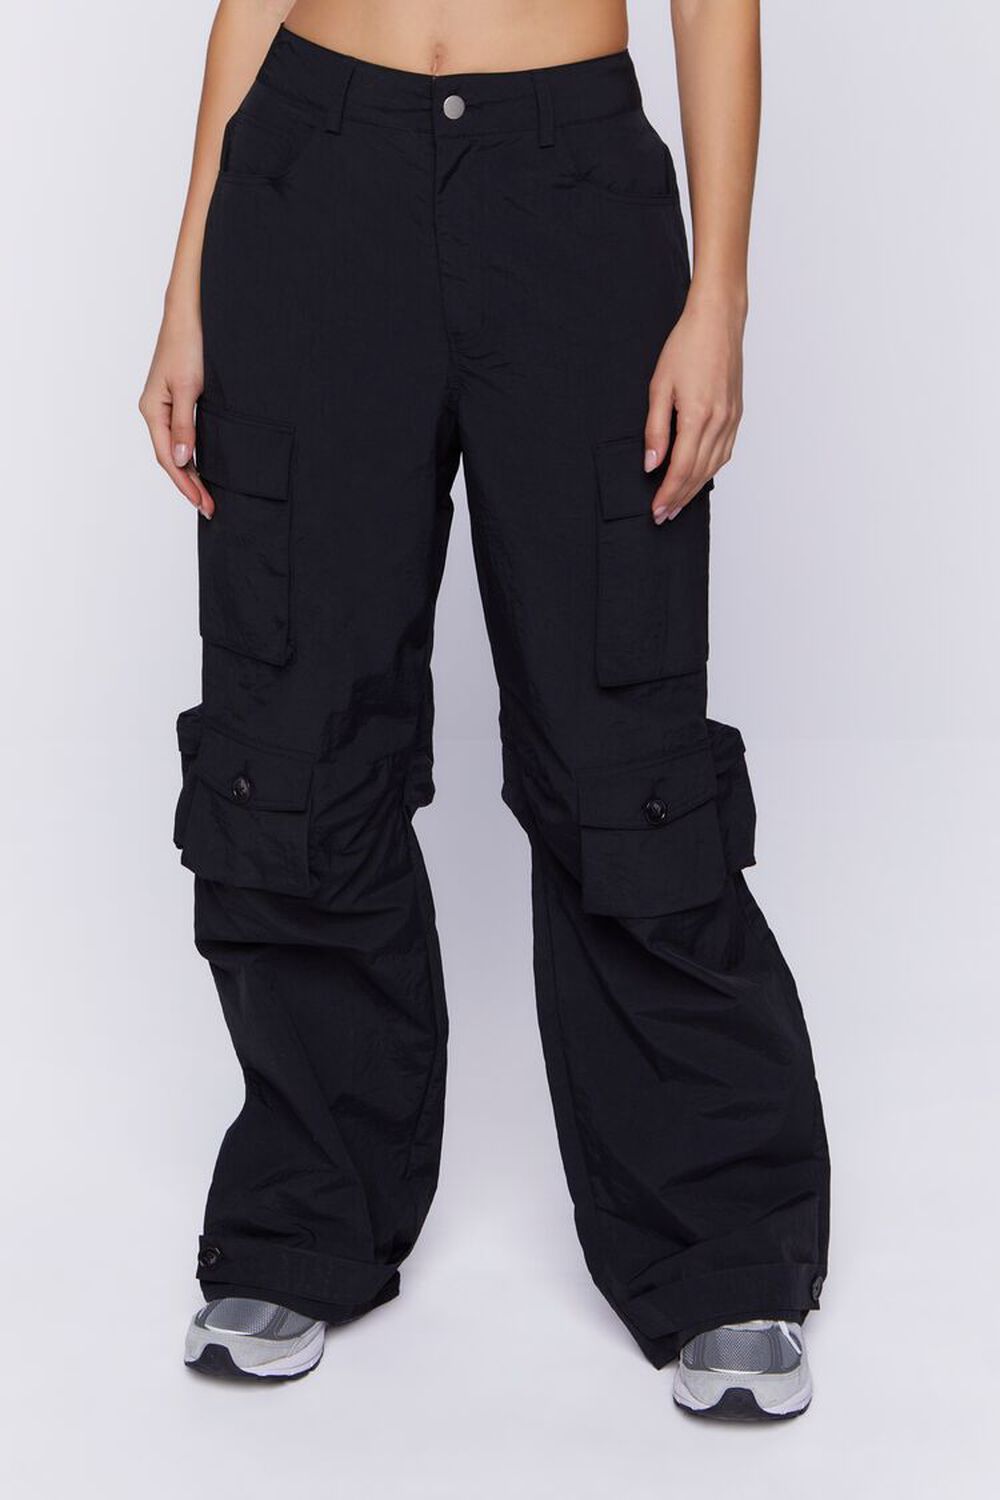 BLACK High-Rise Cargo Pants, image 2